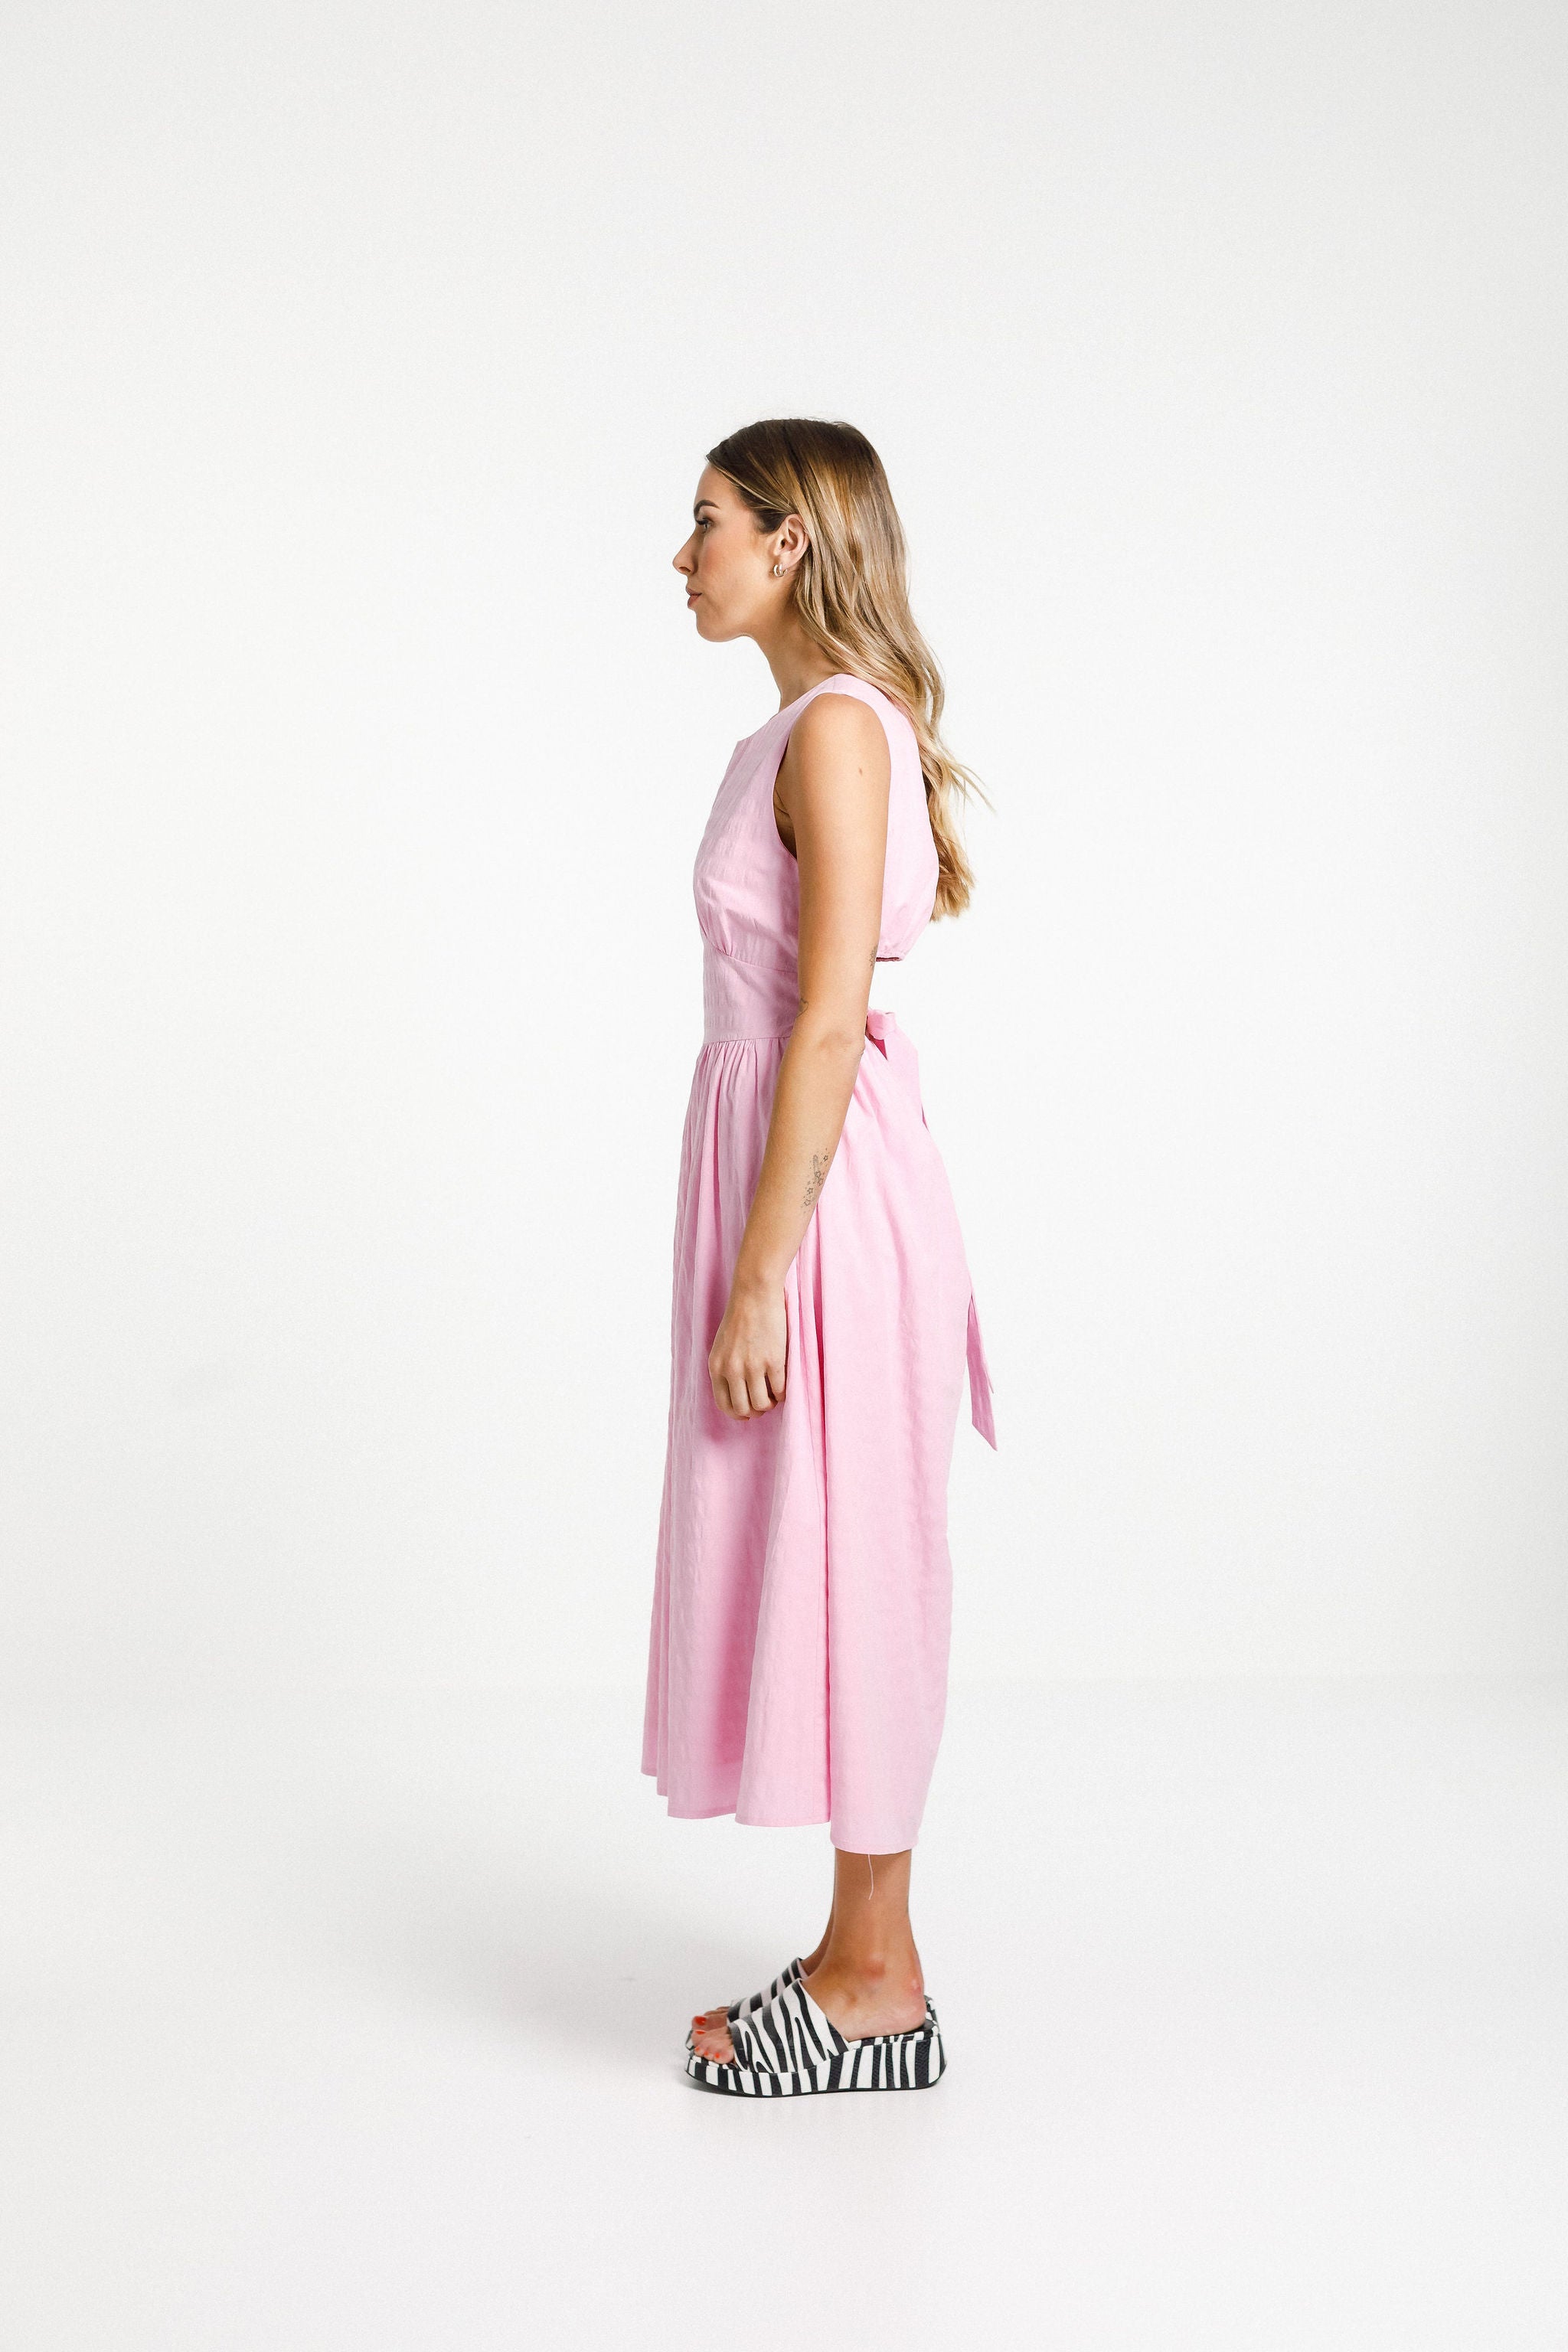 Pippa Dress - Sale - Candy